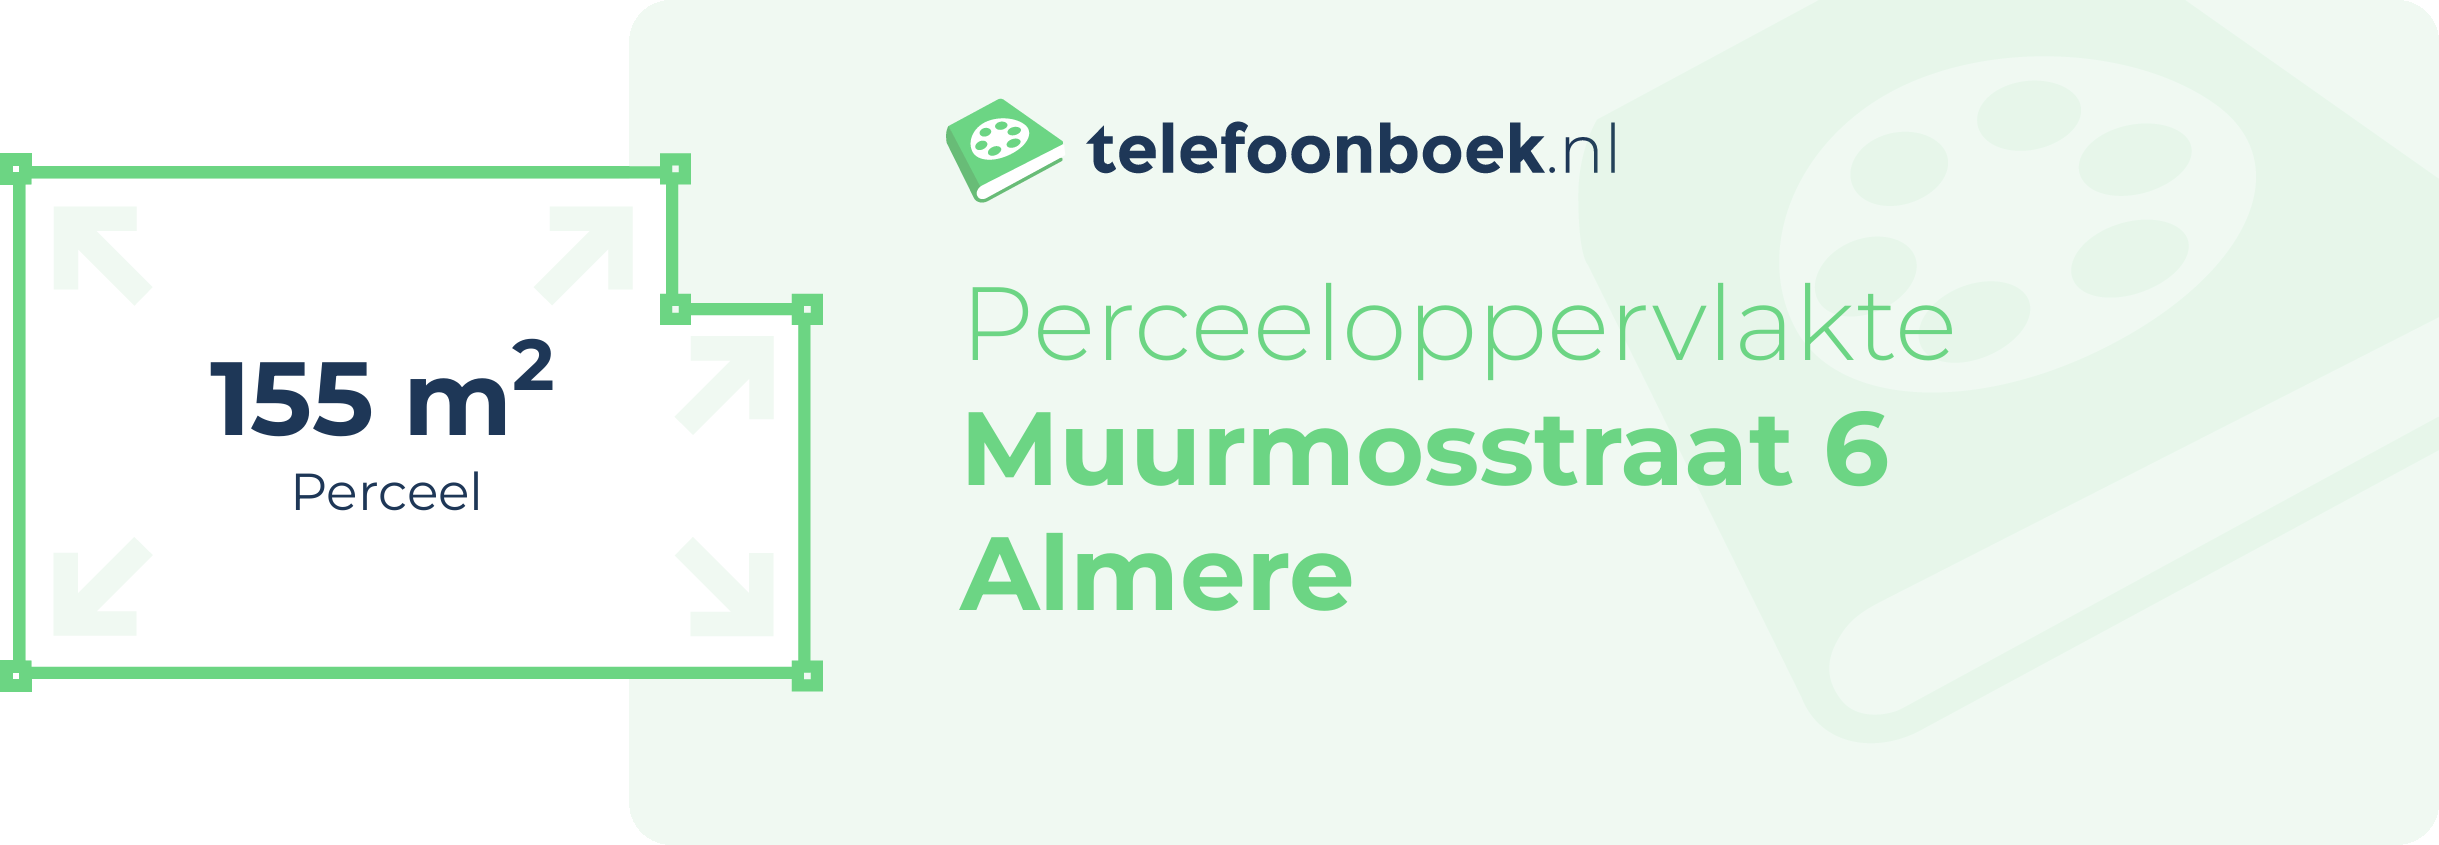 Perceeloppervlakte Muurmosstraat 6 Almere